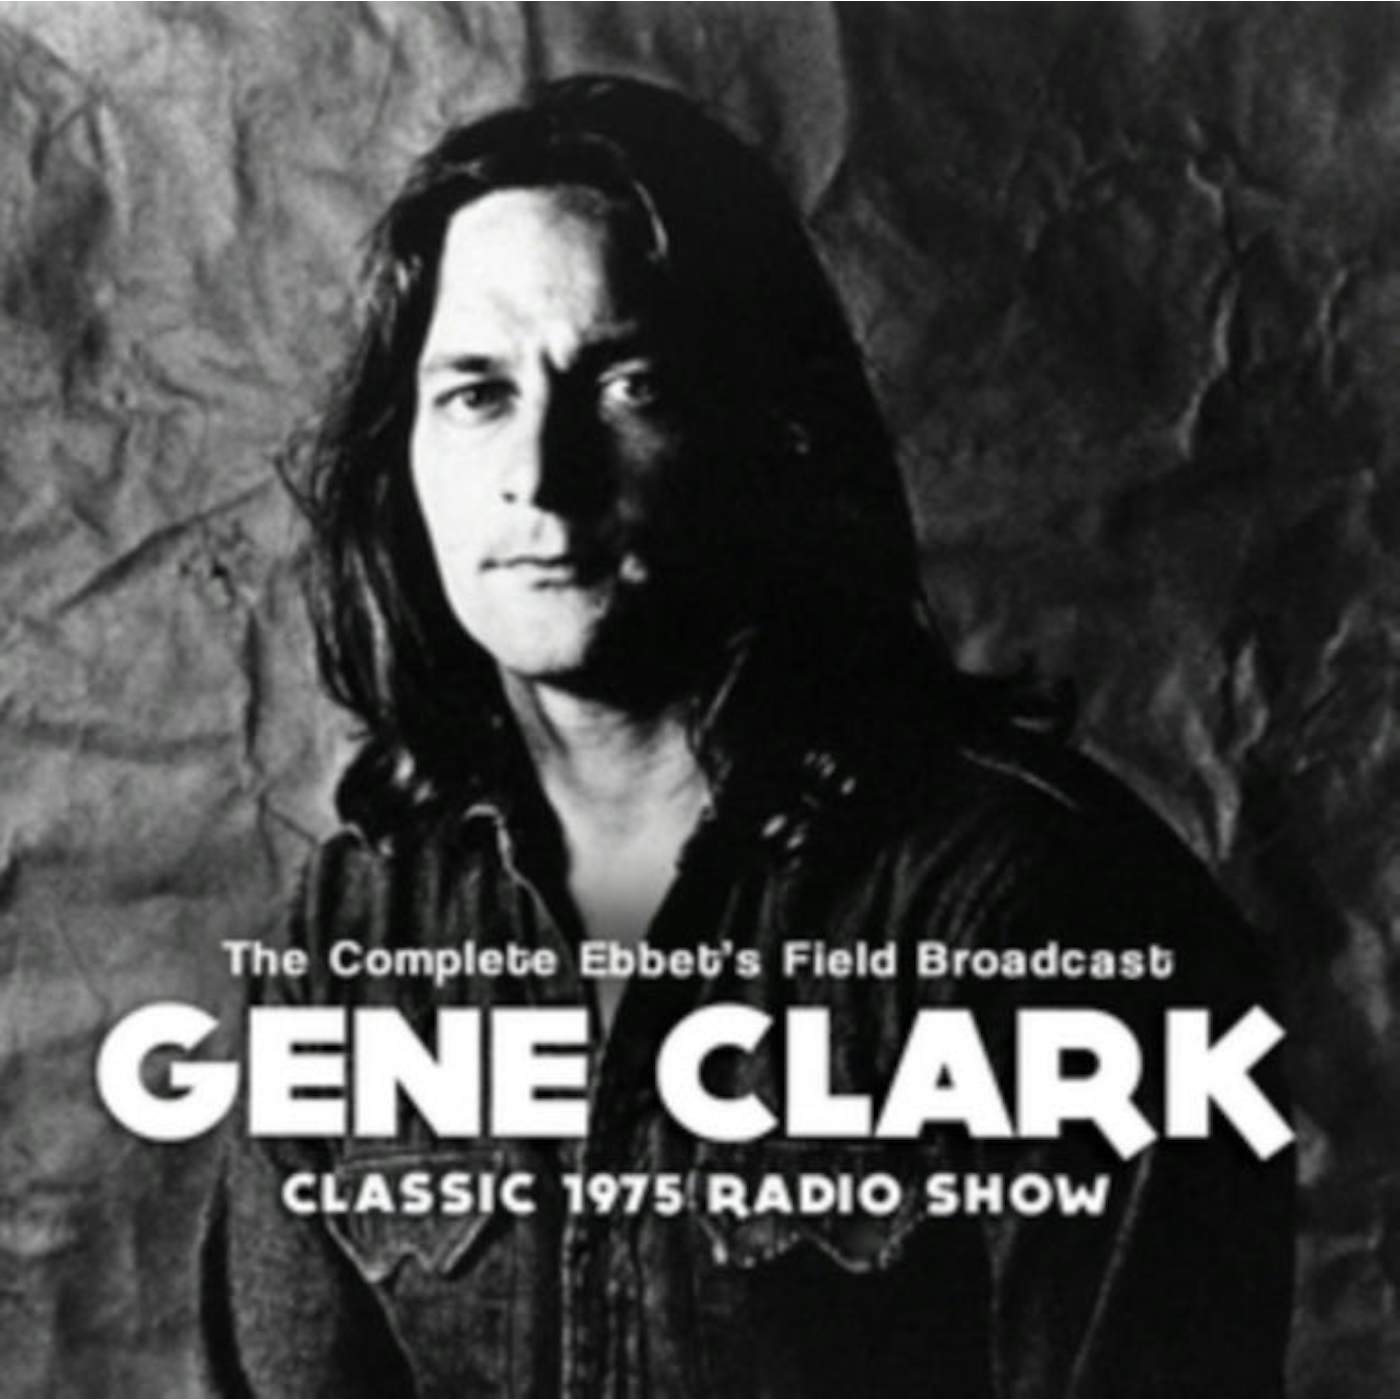 Gene Clark CD - Complete Ebbet’s Field Broadcast